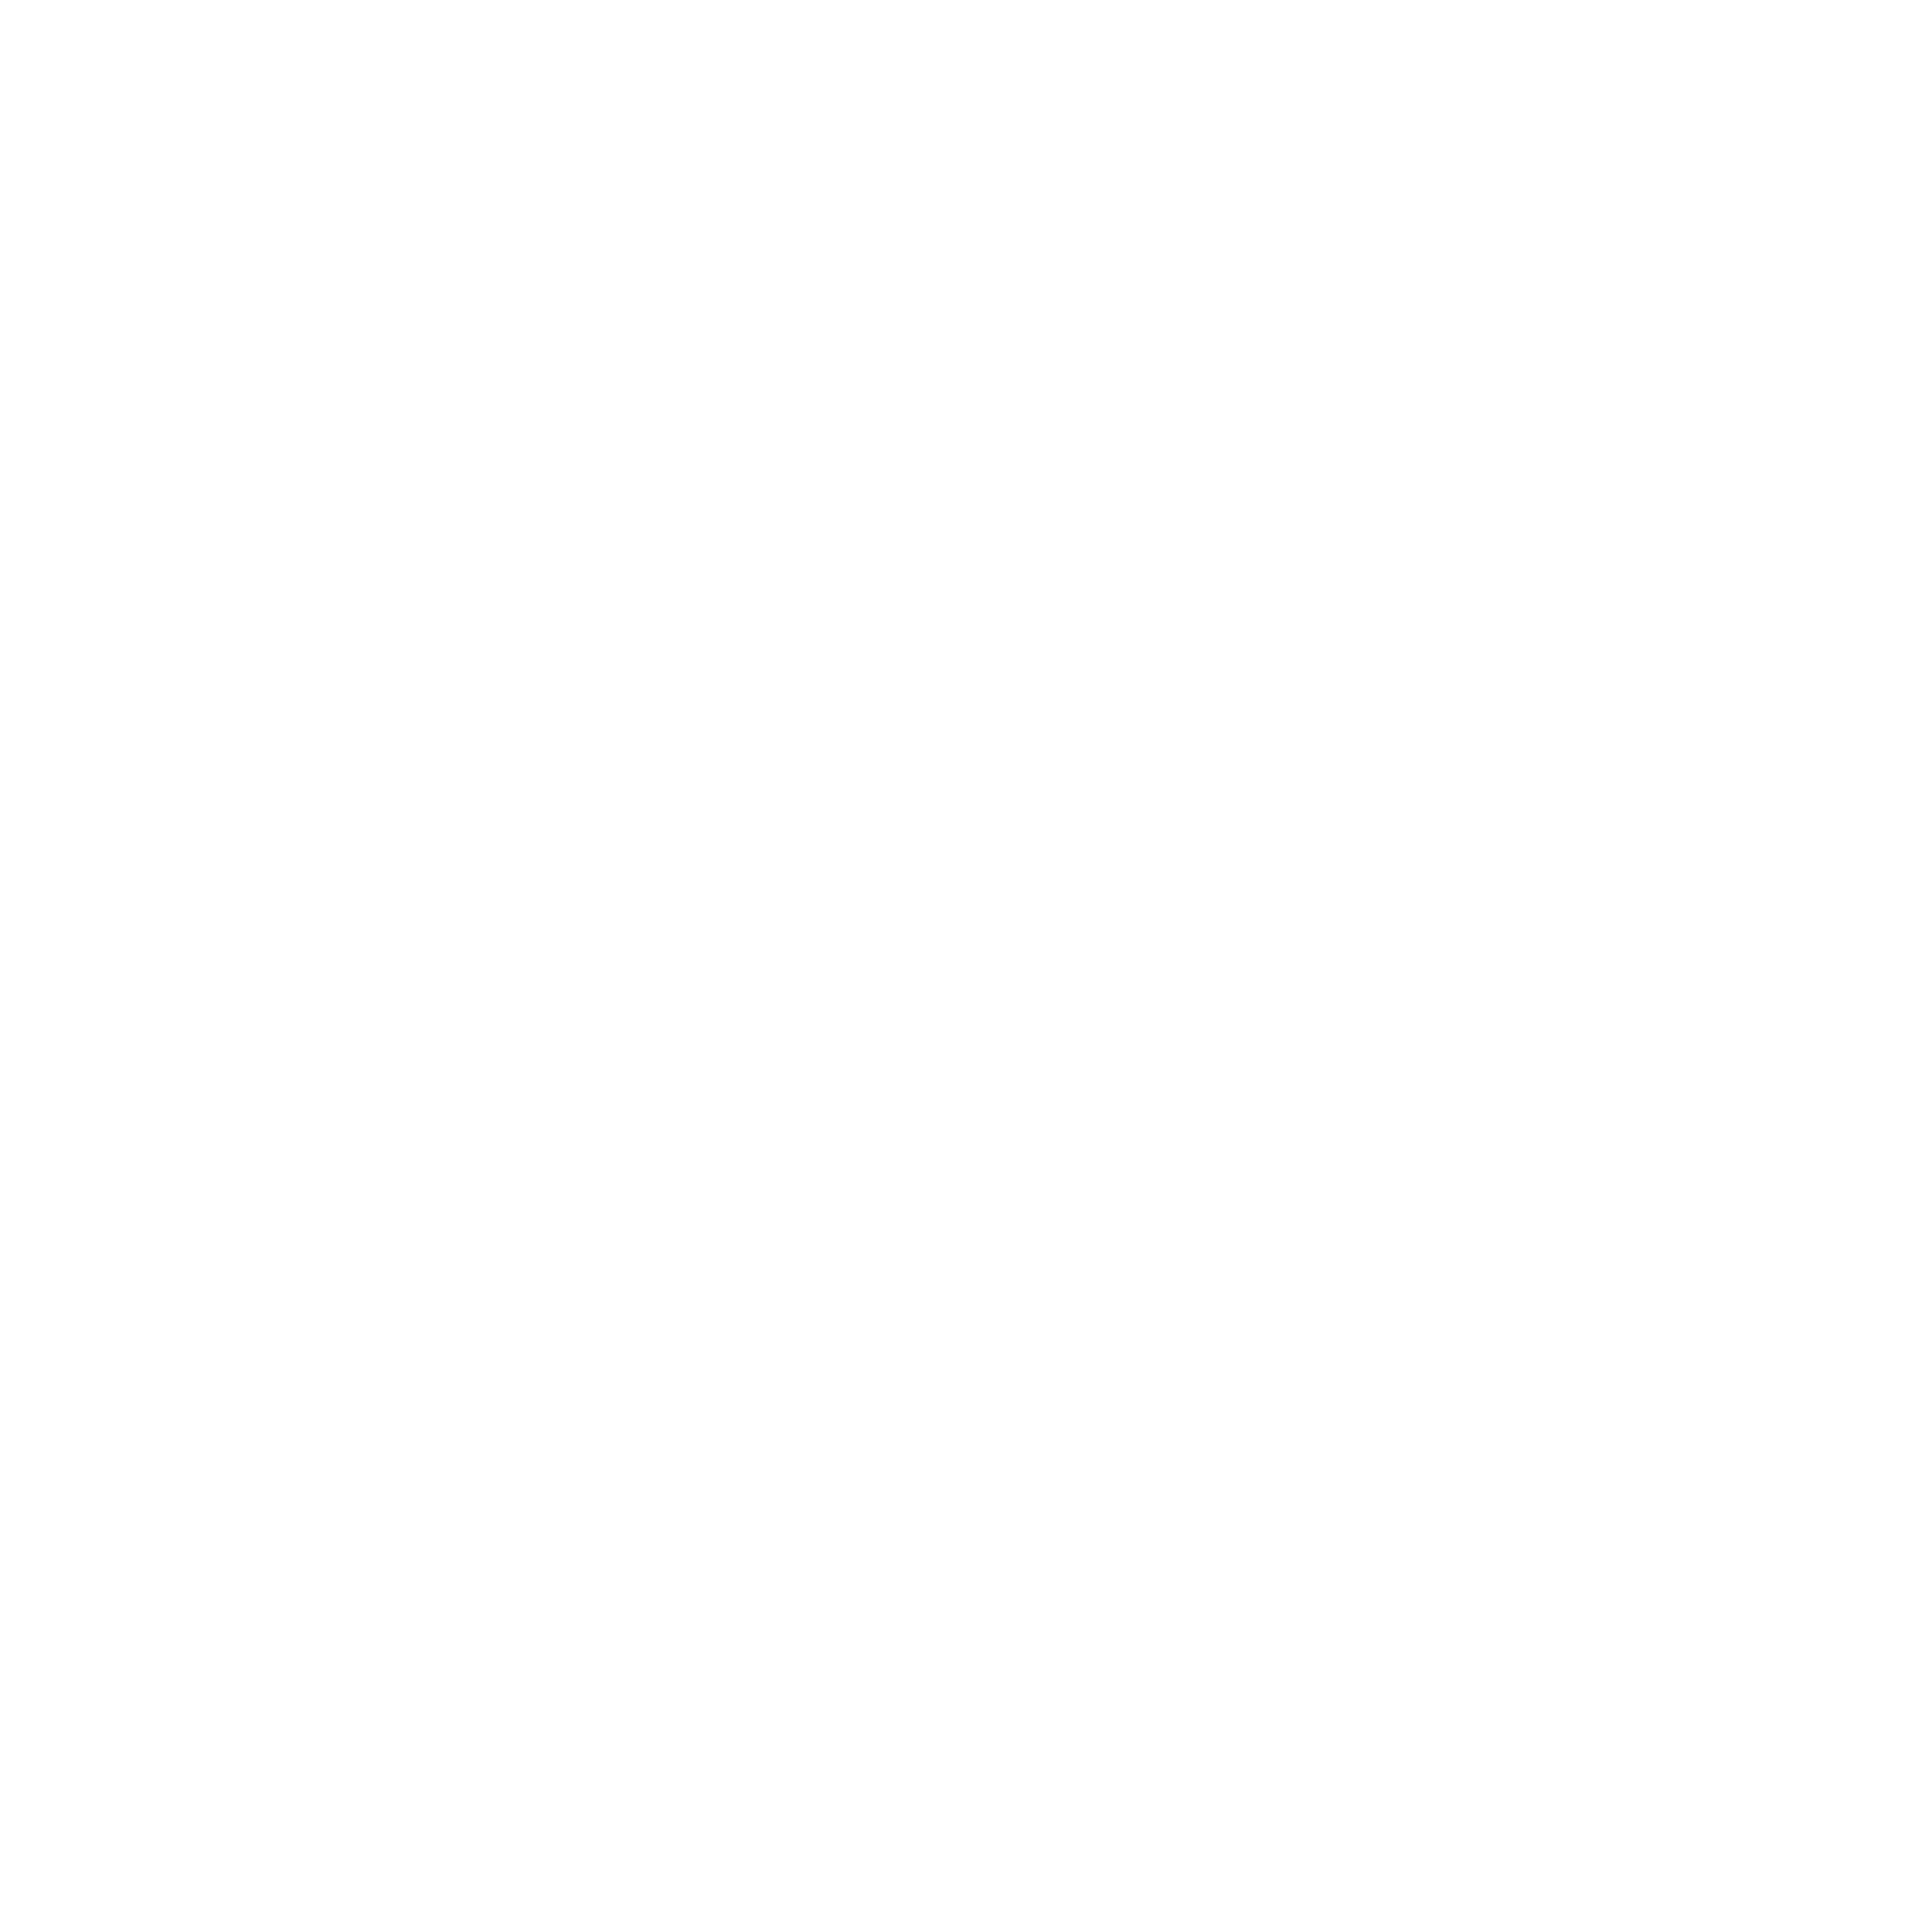 Buffalo Museum of Science